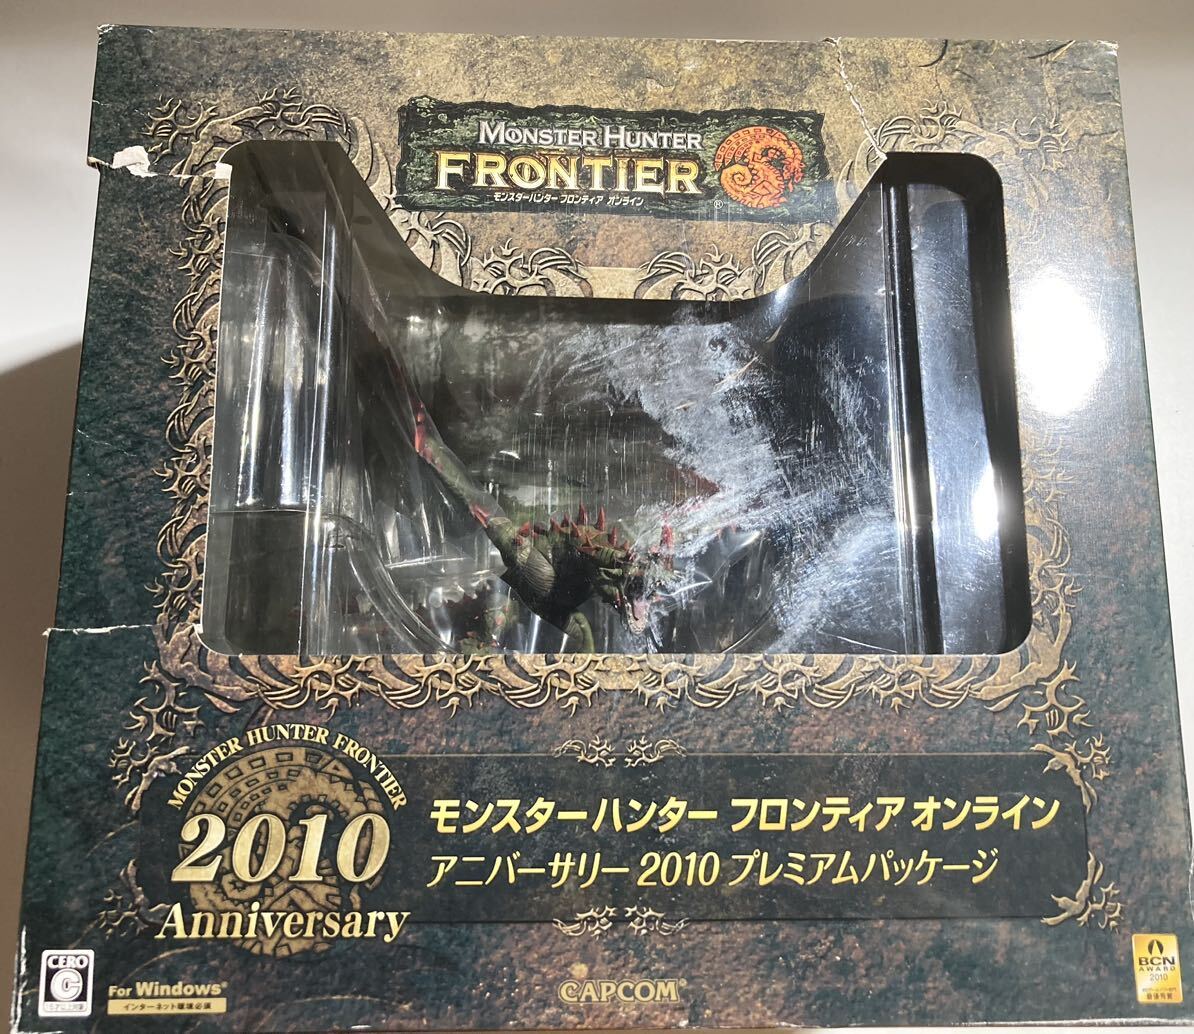 CAPCOM Capcom Monstar Hunter Frontier online Anniversary 2010 premium package 